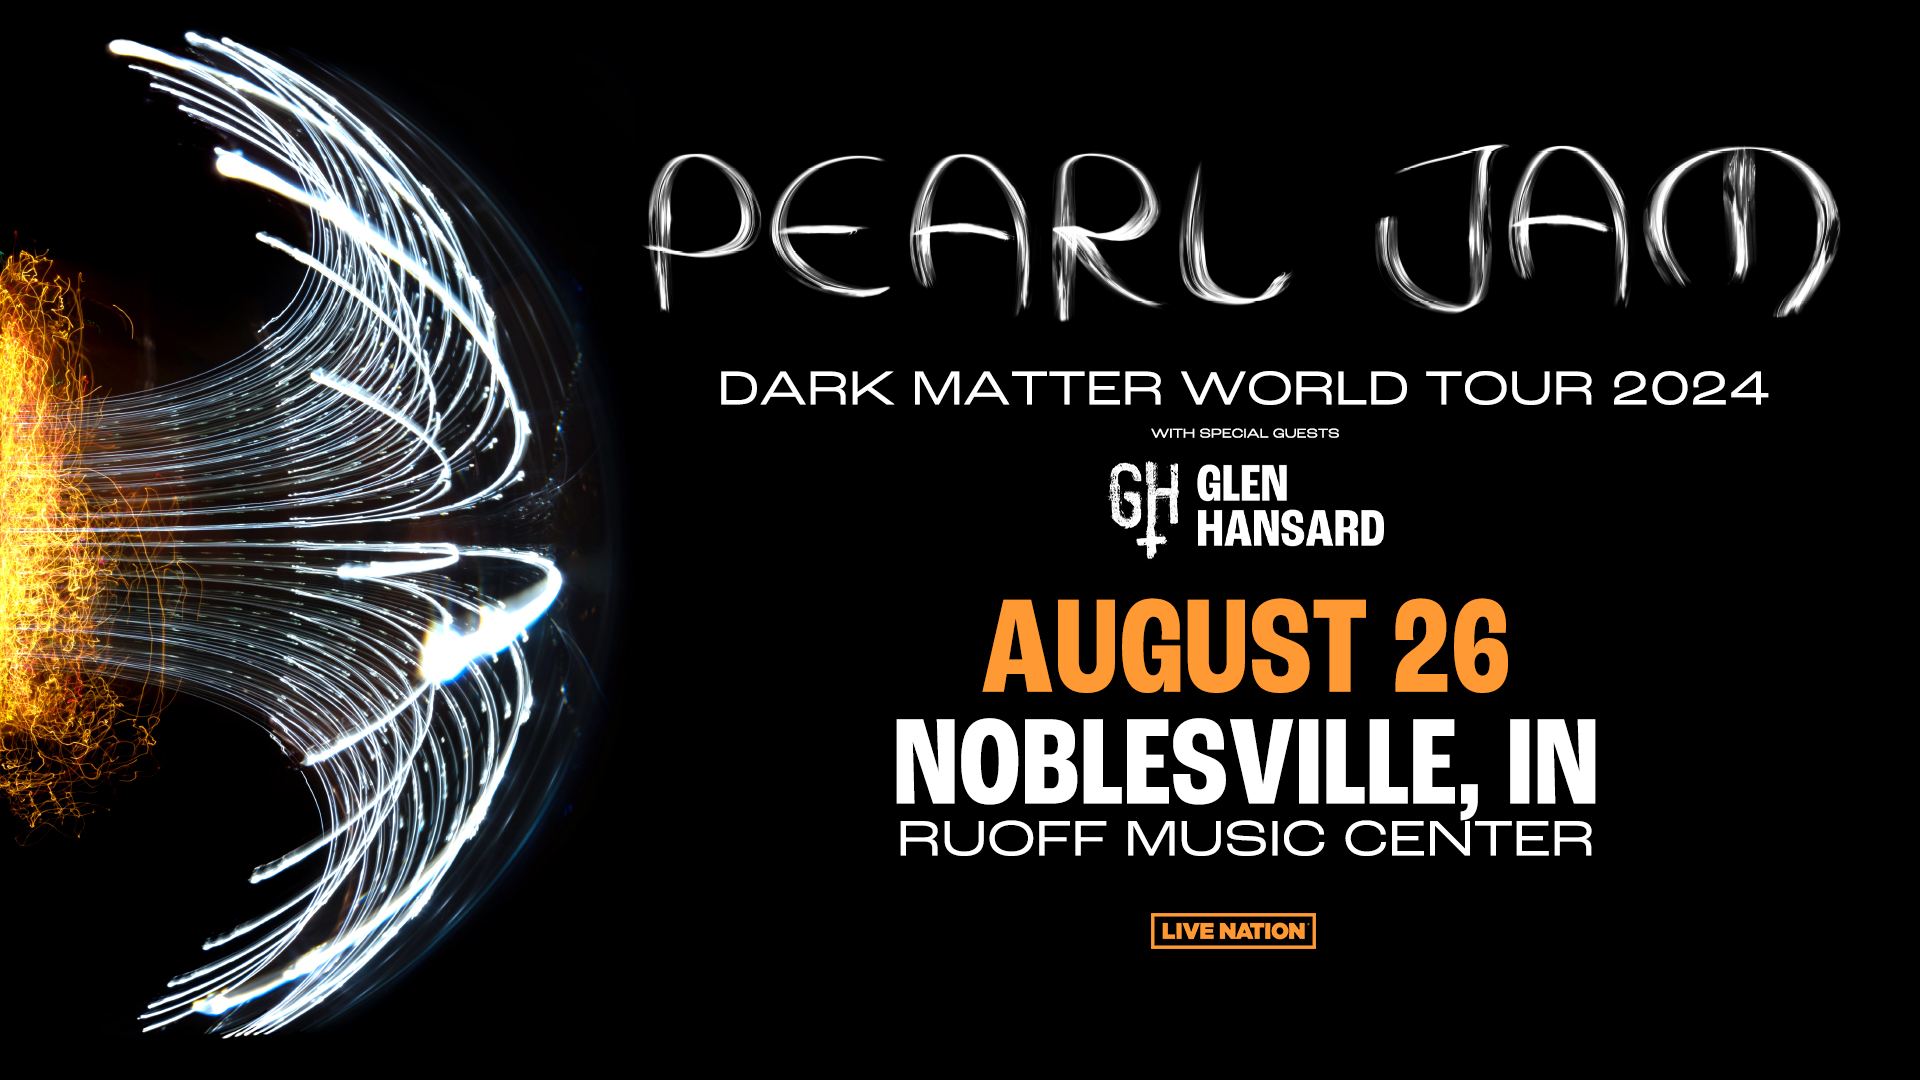 August 26 – Pearl Jam